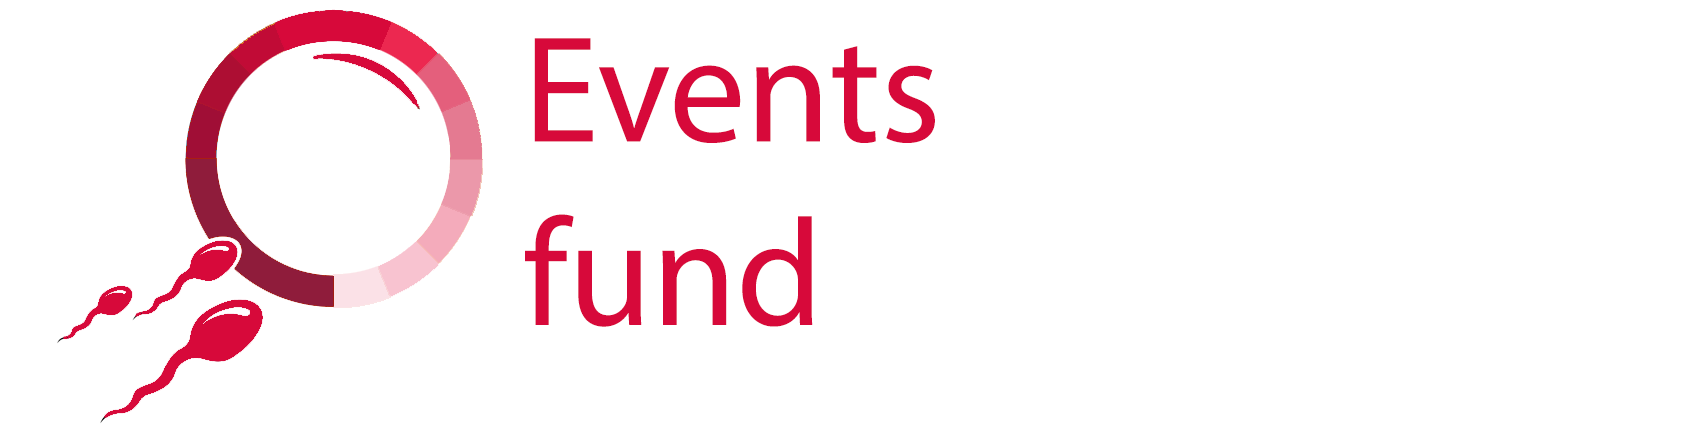 Events fund logo